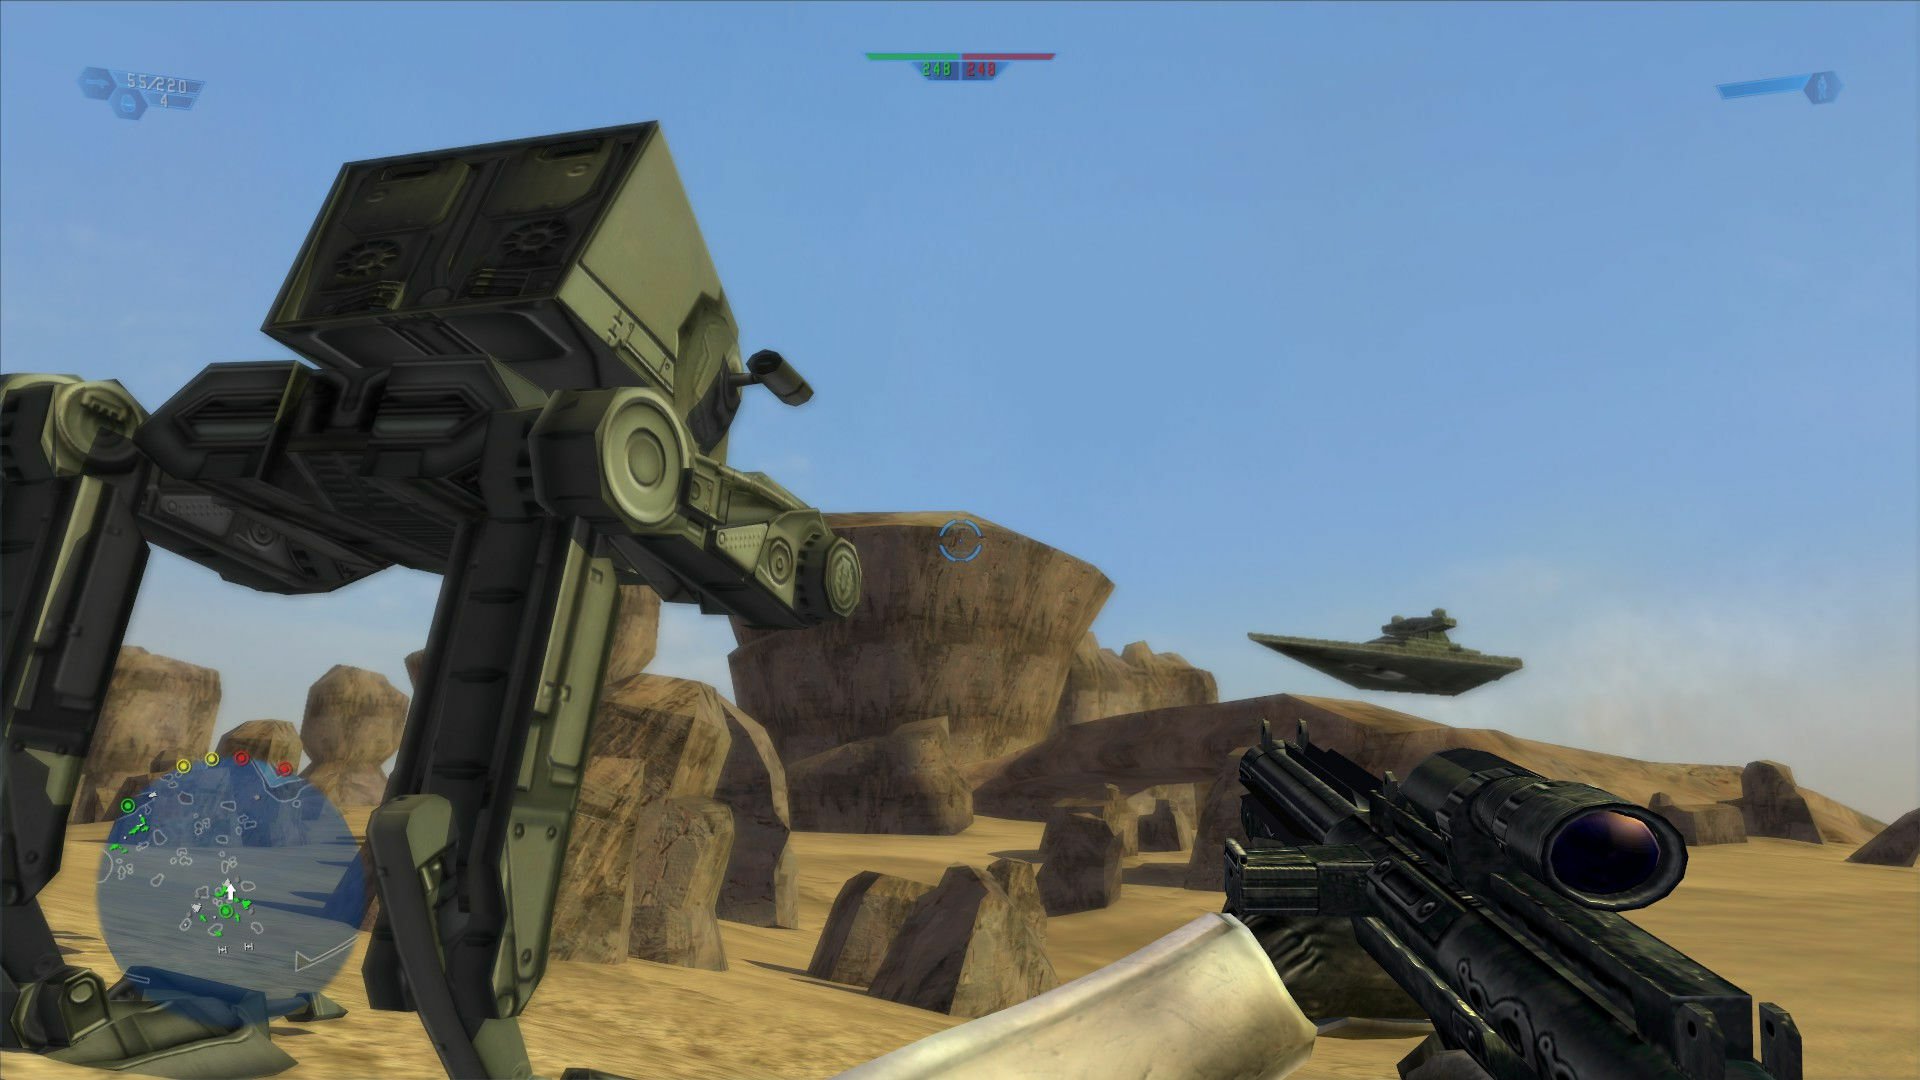 Скриншот 2 к игре Star Wars Battlefront v1.3.7.4 [GOG] (2004)